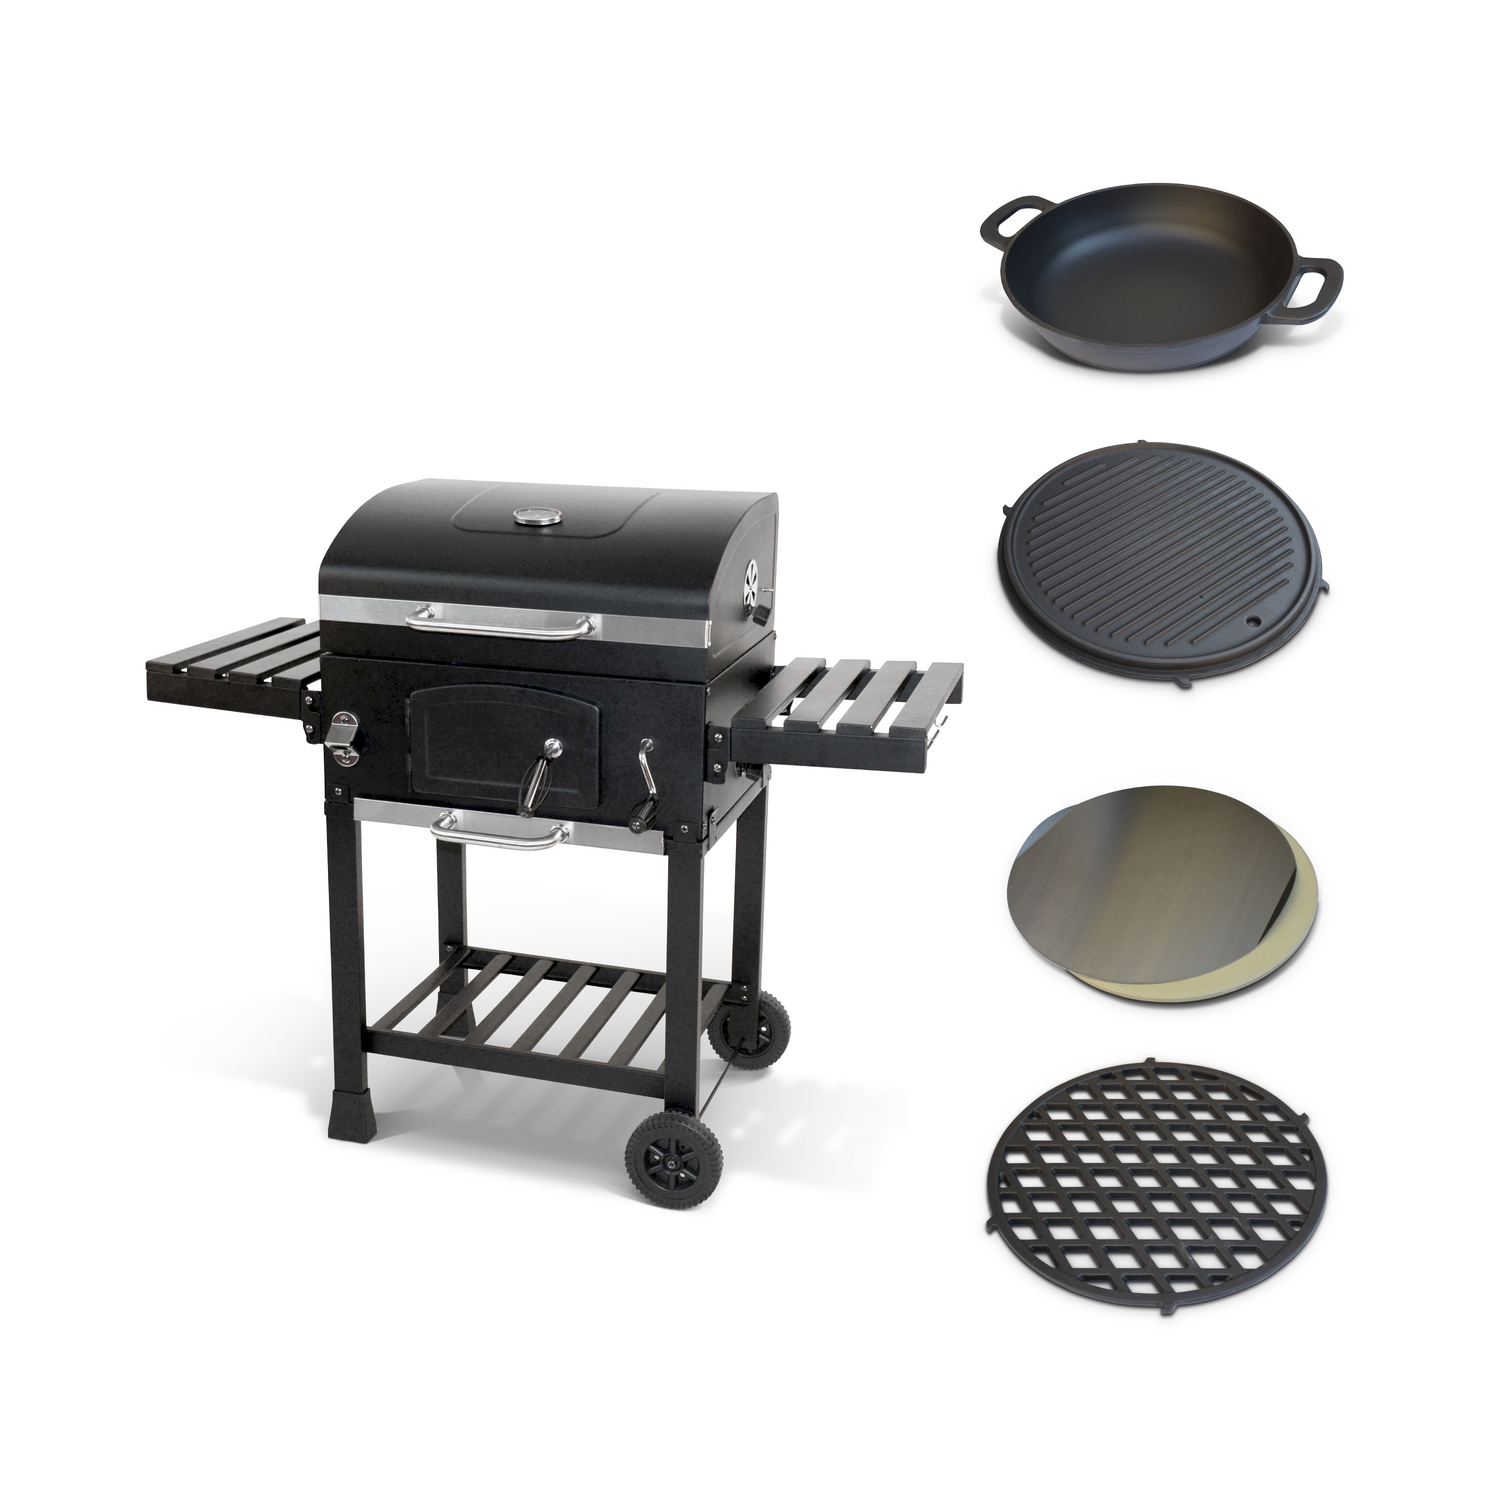 Houtskoolbarbecue - Smoker met asbak + Kookaccessoires: Wok, grill, plaat, steen Photo1